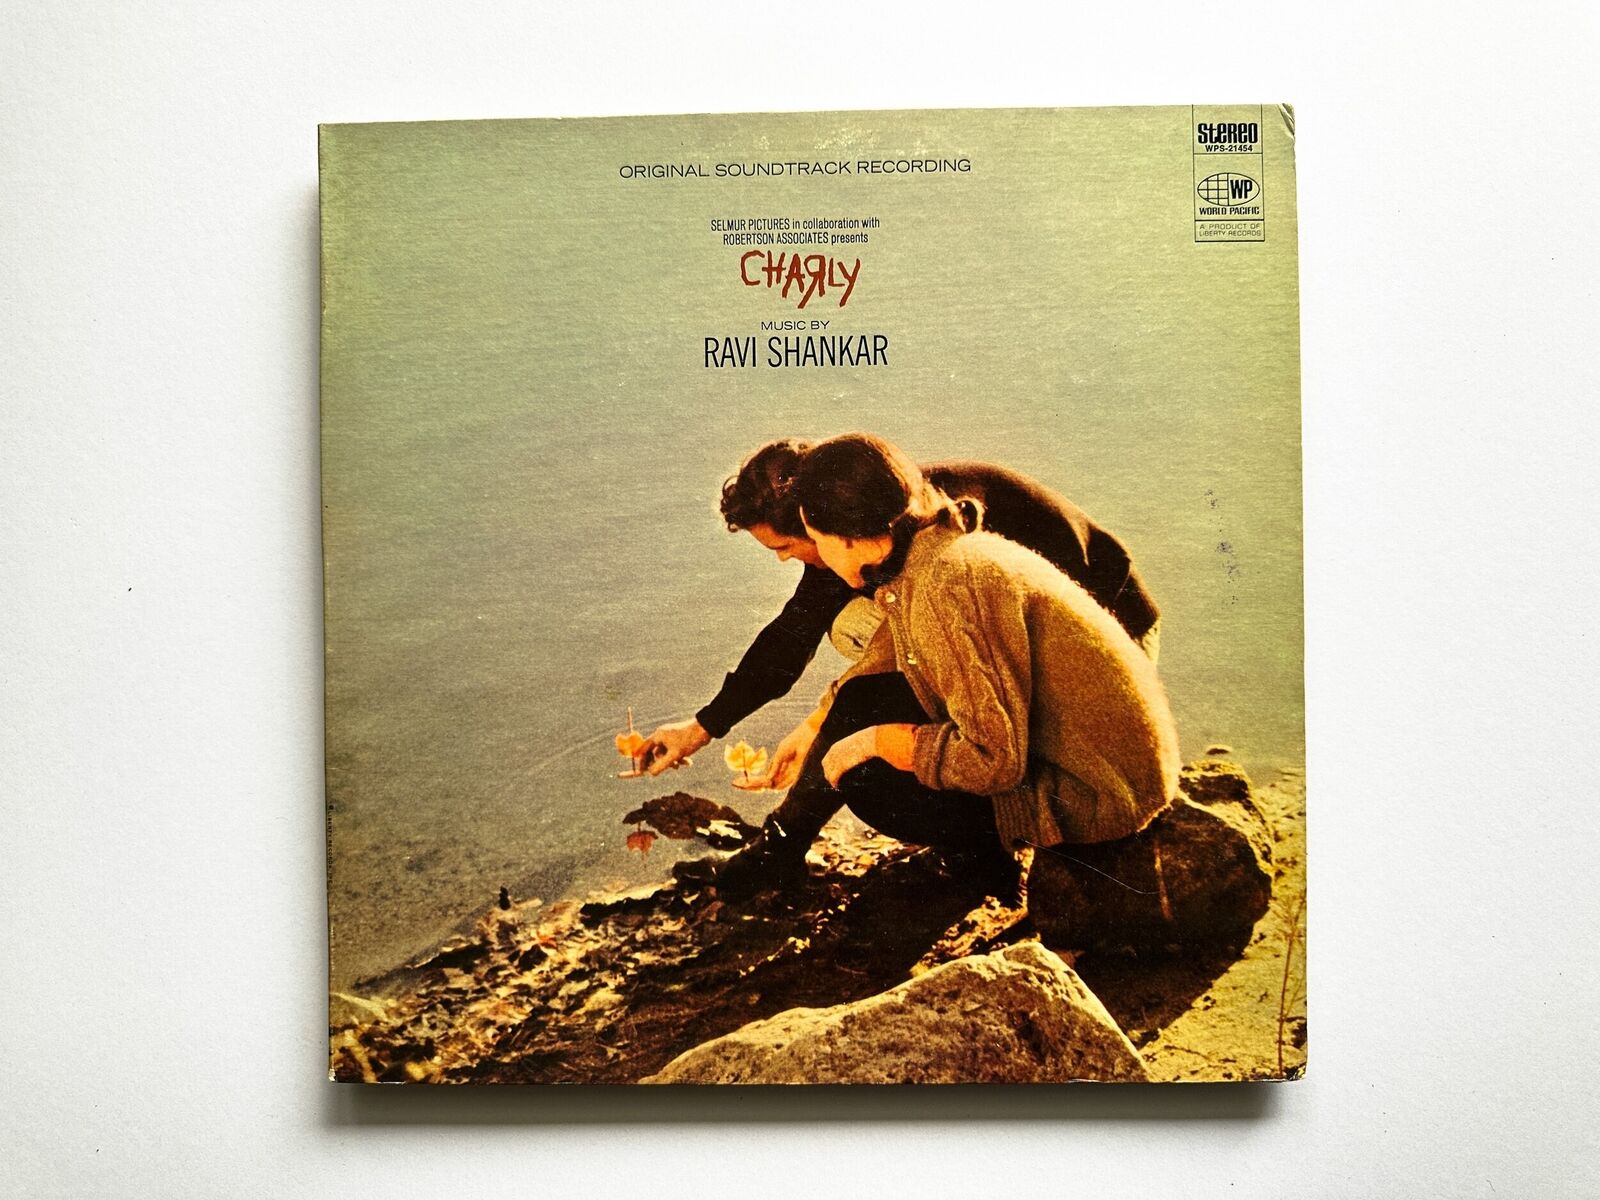 Ravi Shankar - Charly - Vinyl LP Record - 1968